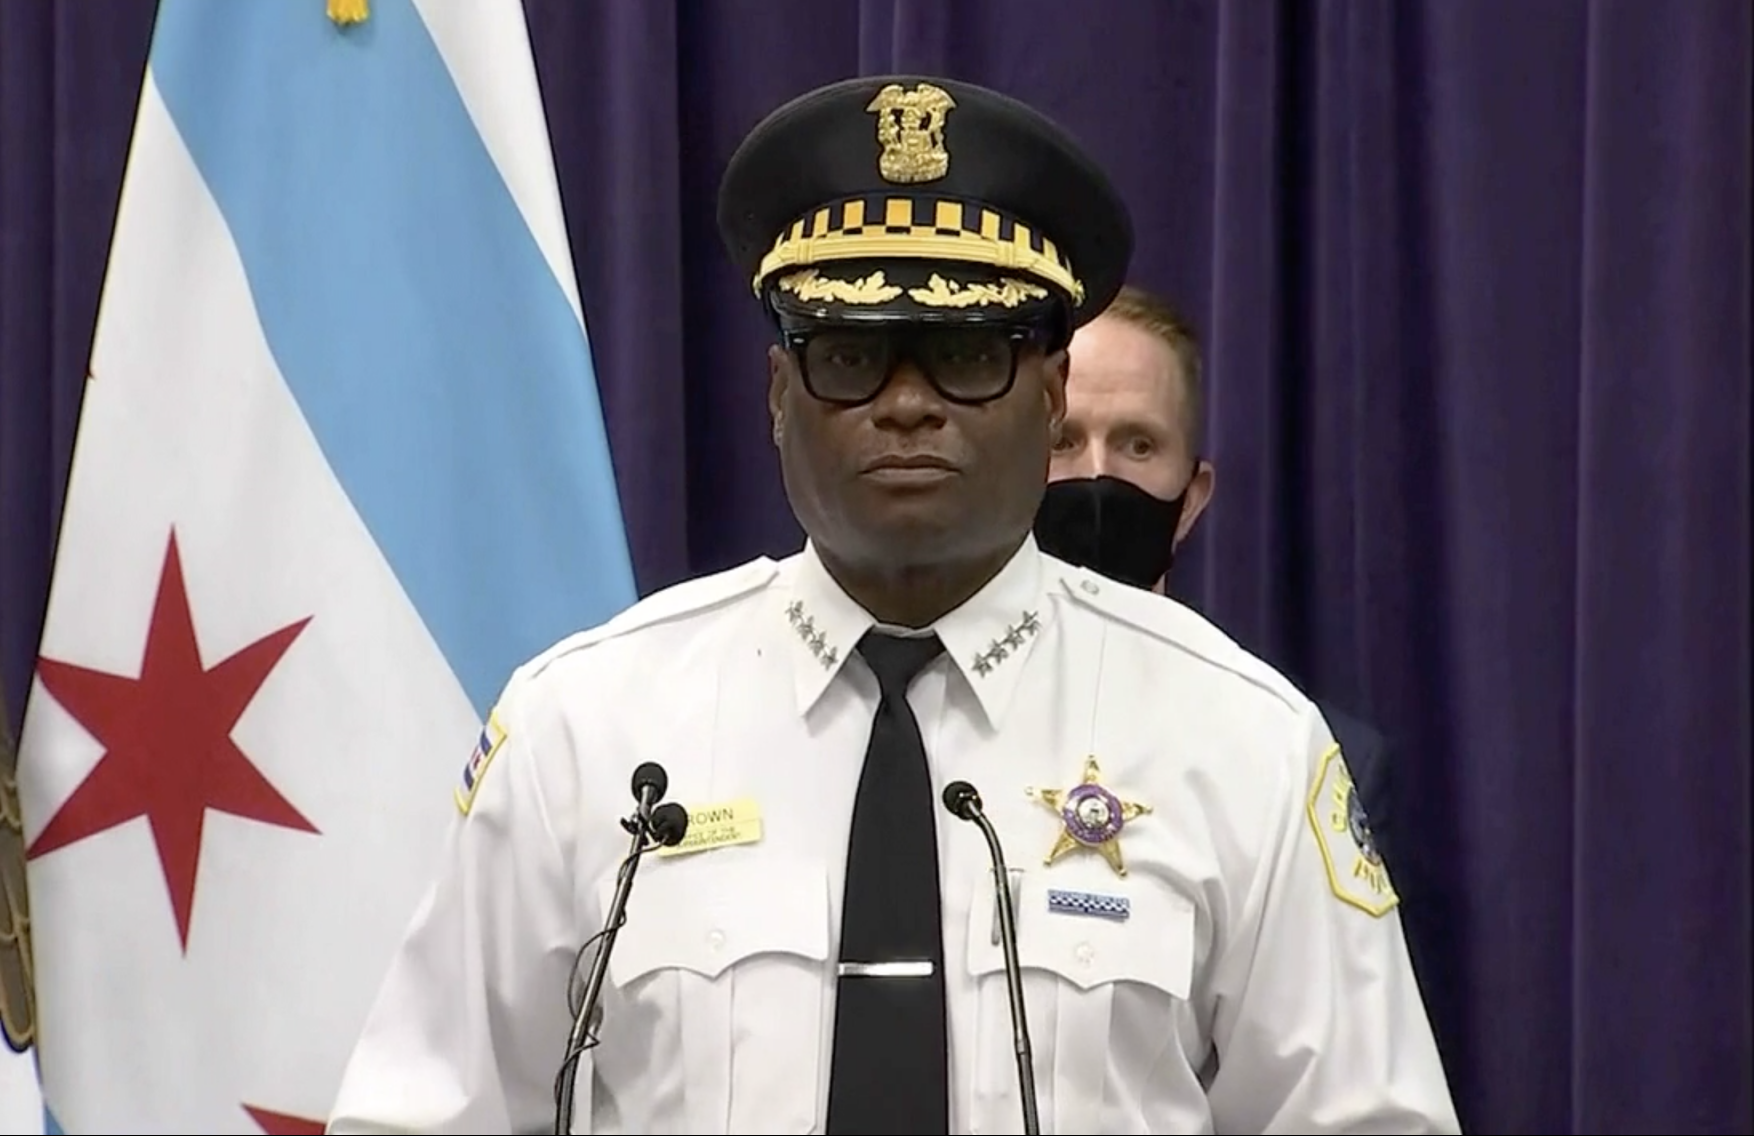 Chicago Police Department Superintendent David Brown